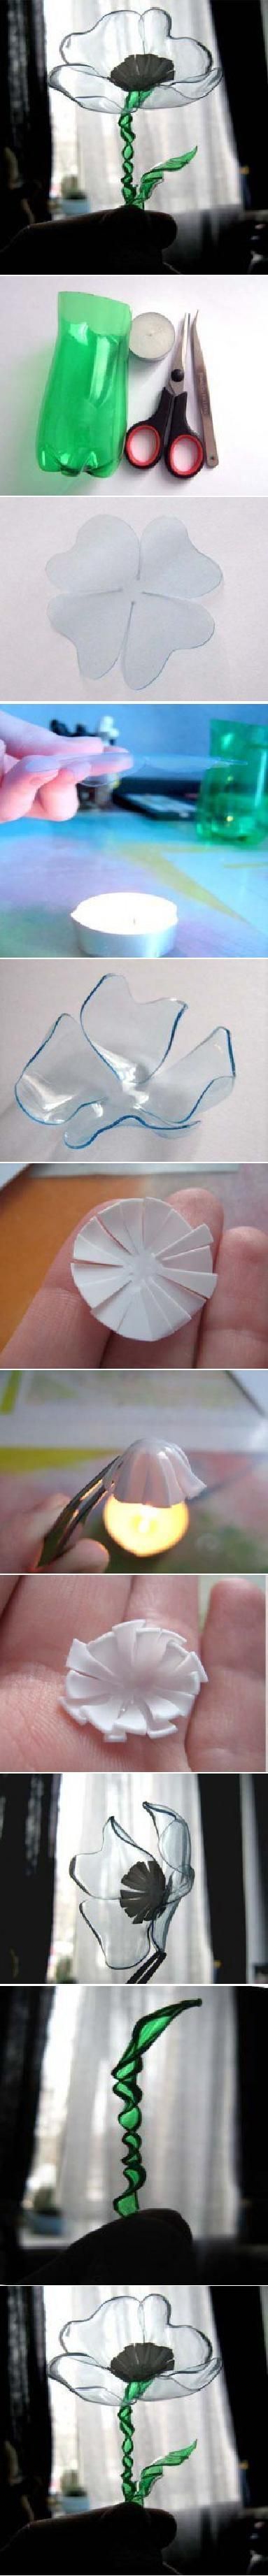 DIY Flower from a Plastic Bottle | FabDIY